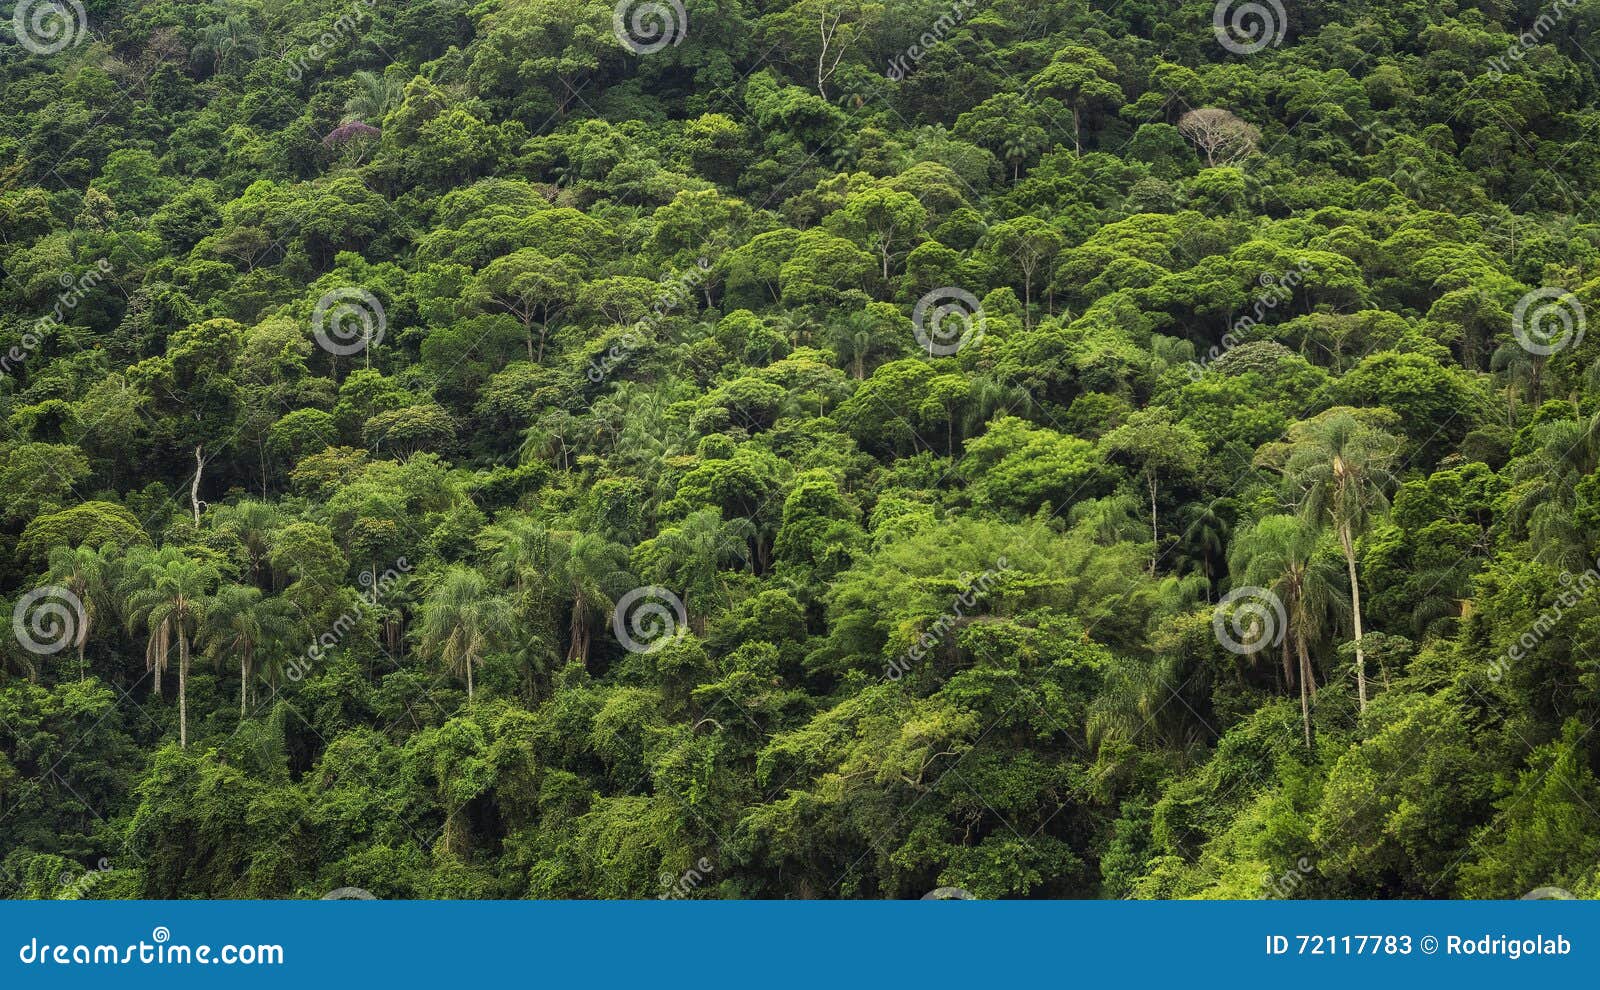 dense tropical rainforest in brazil, nature background